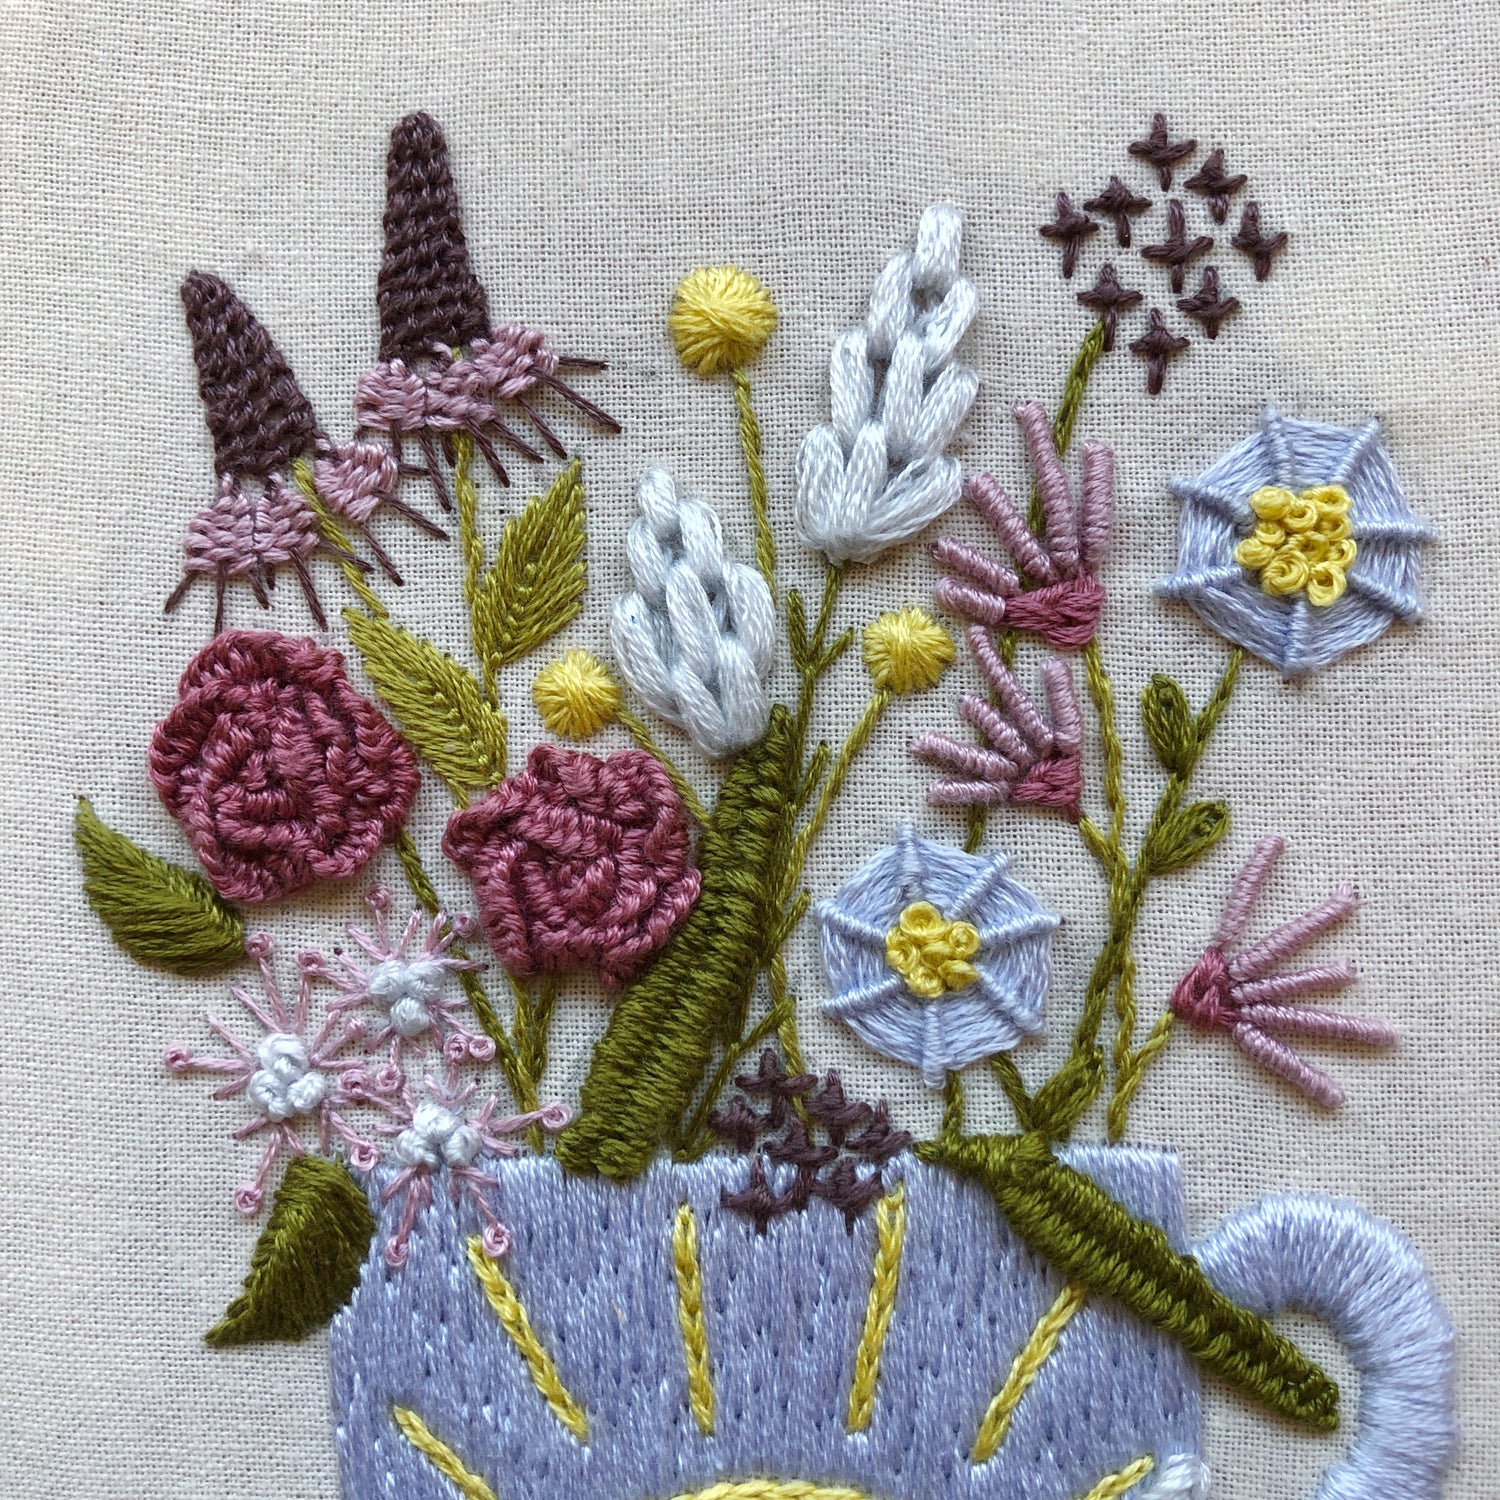 DIY Embroidery Transfer Paper Hand Stitch Cross Stitch Supplies